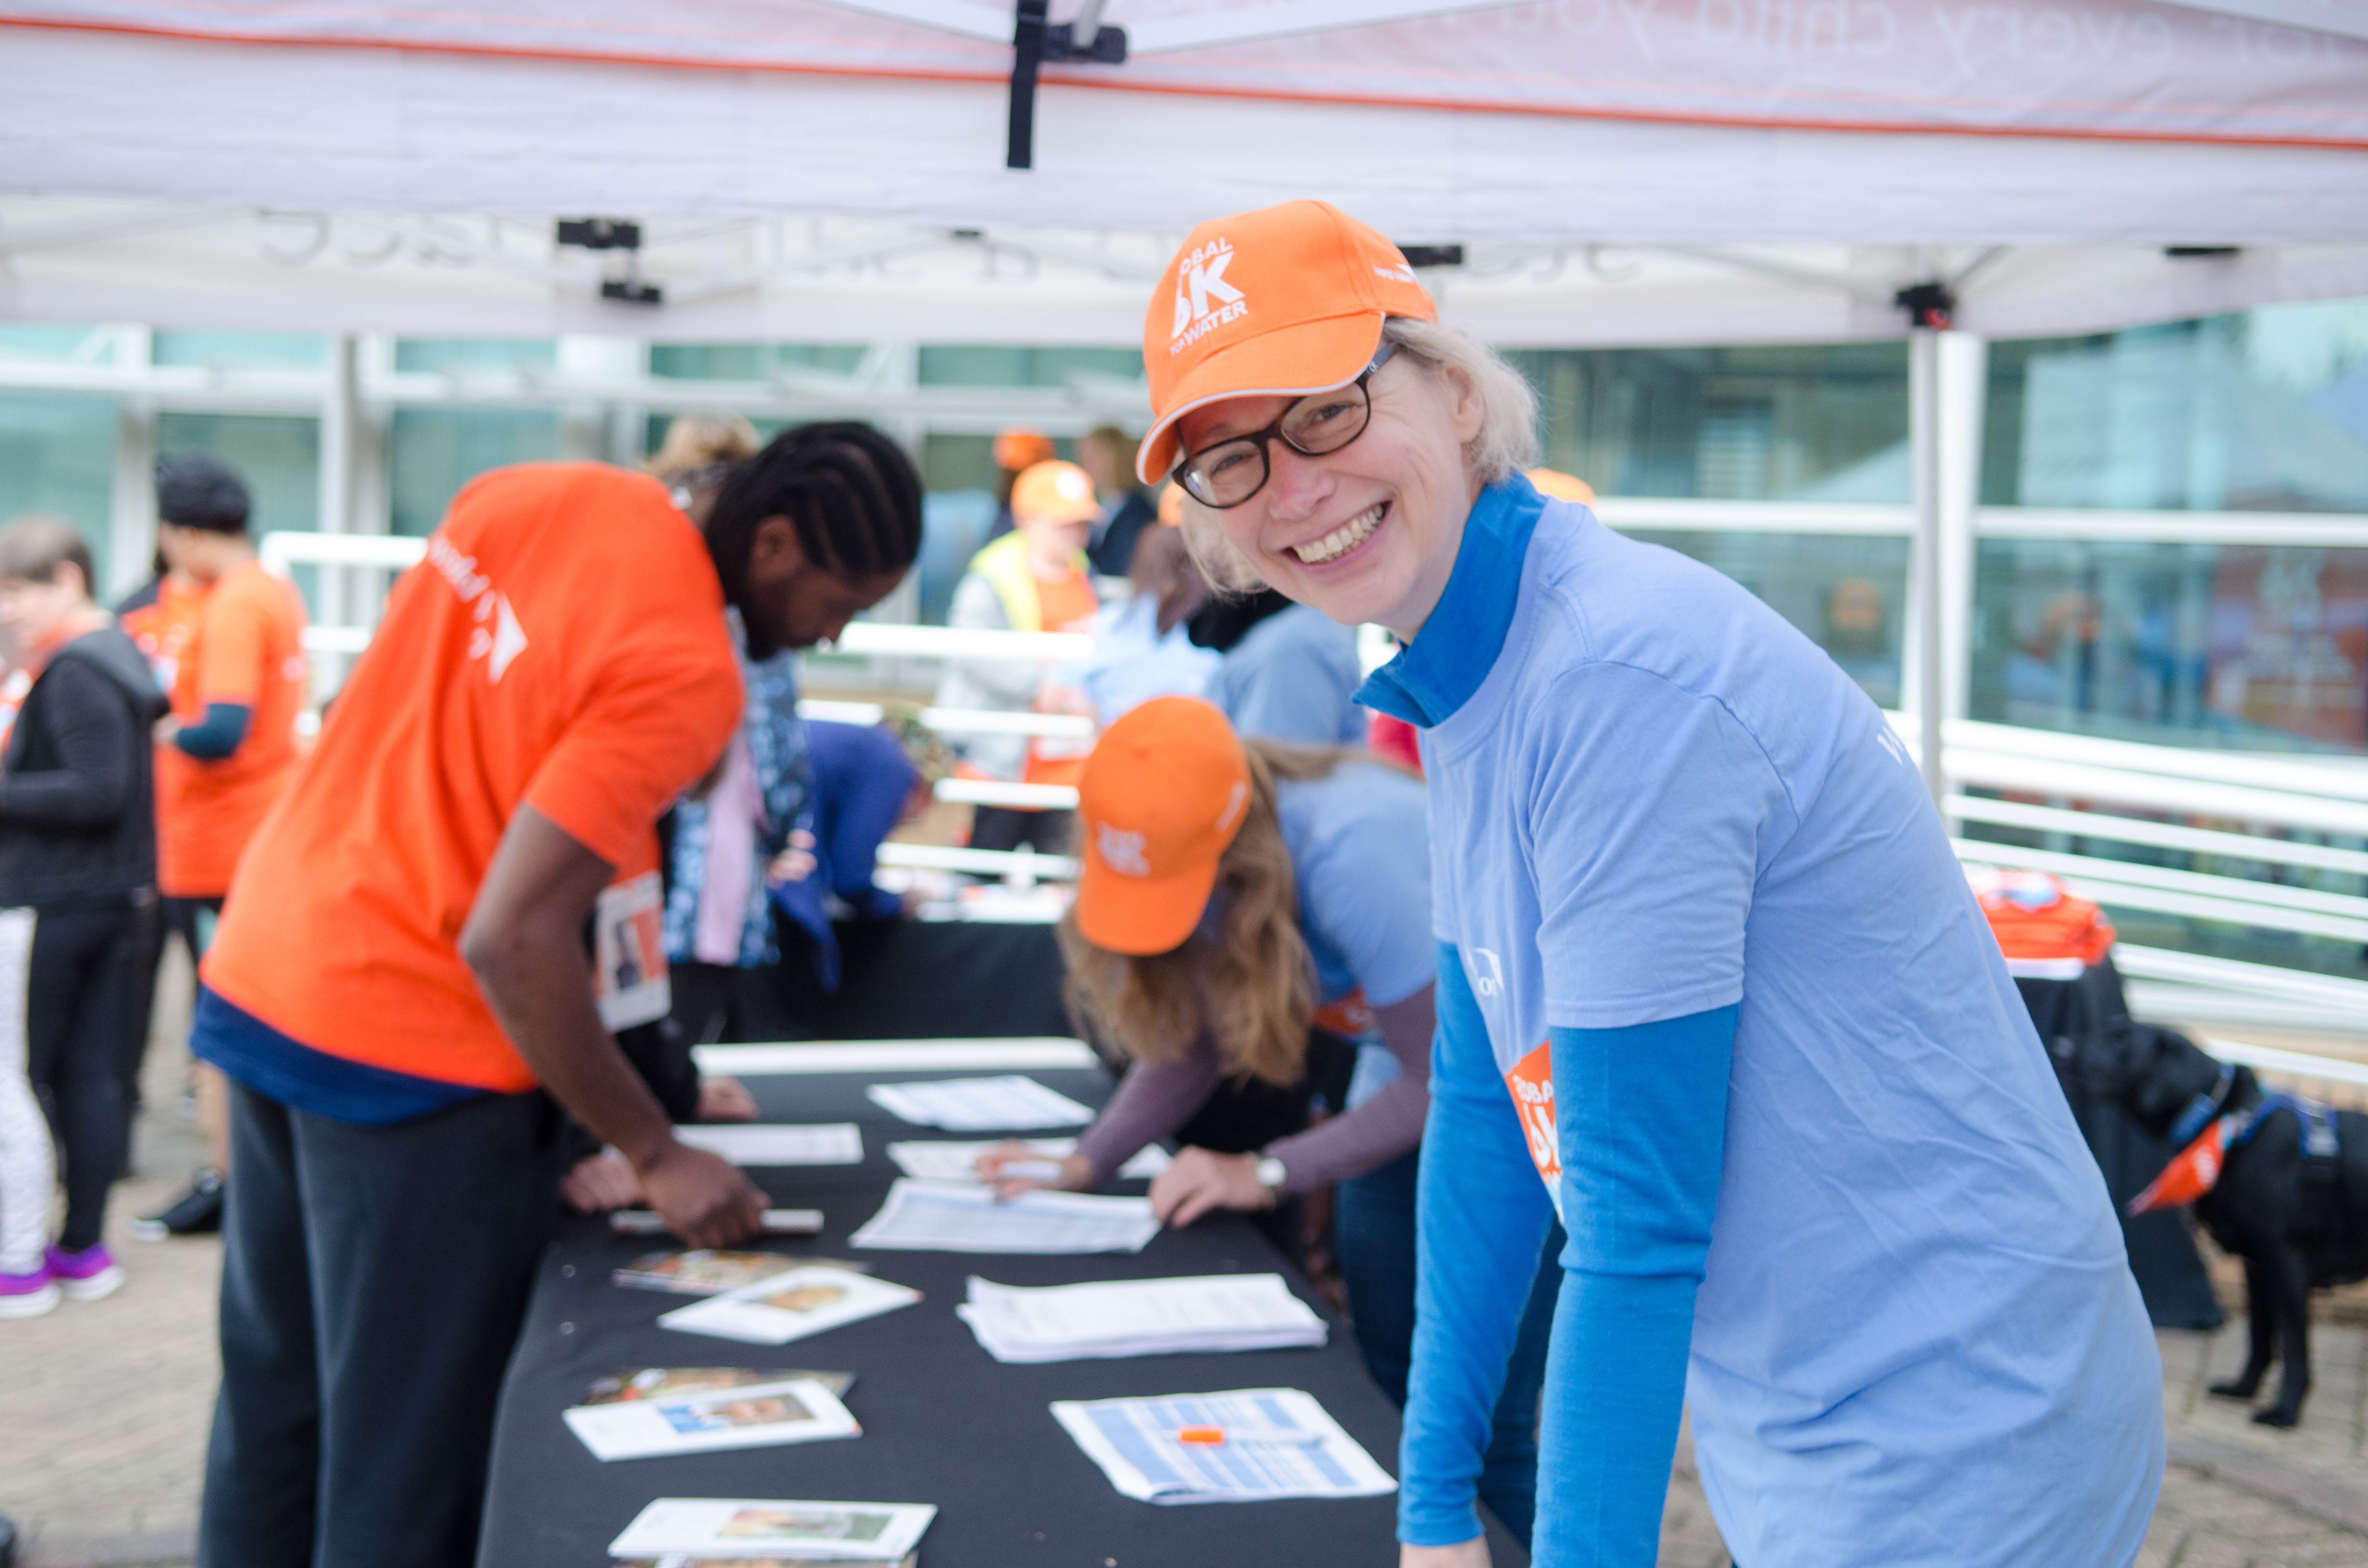 Un voluntario se involucra en un evento de World Vision ayudando a registrar participantes en un evento.